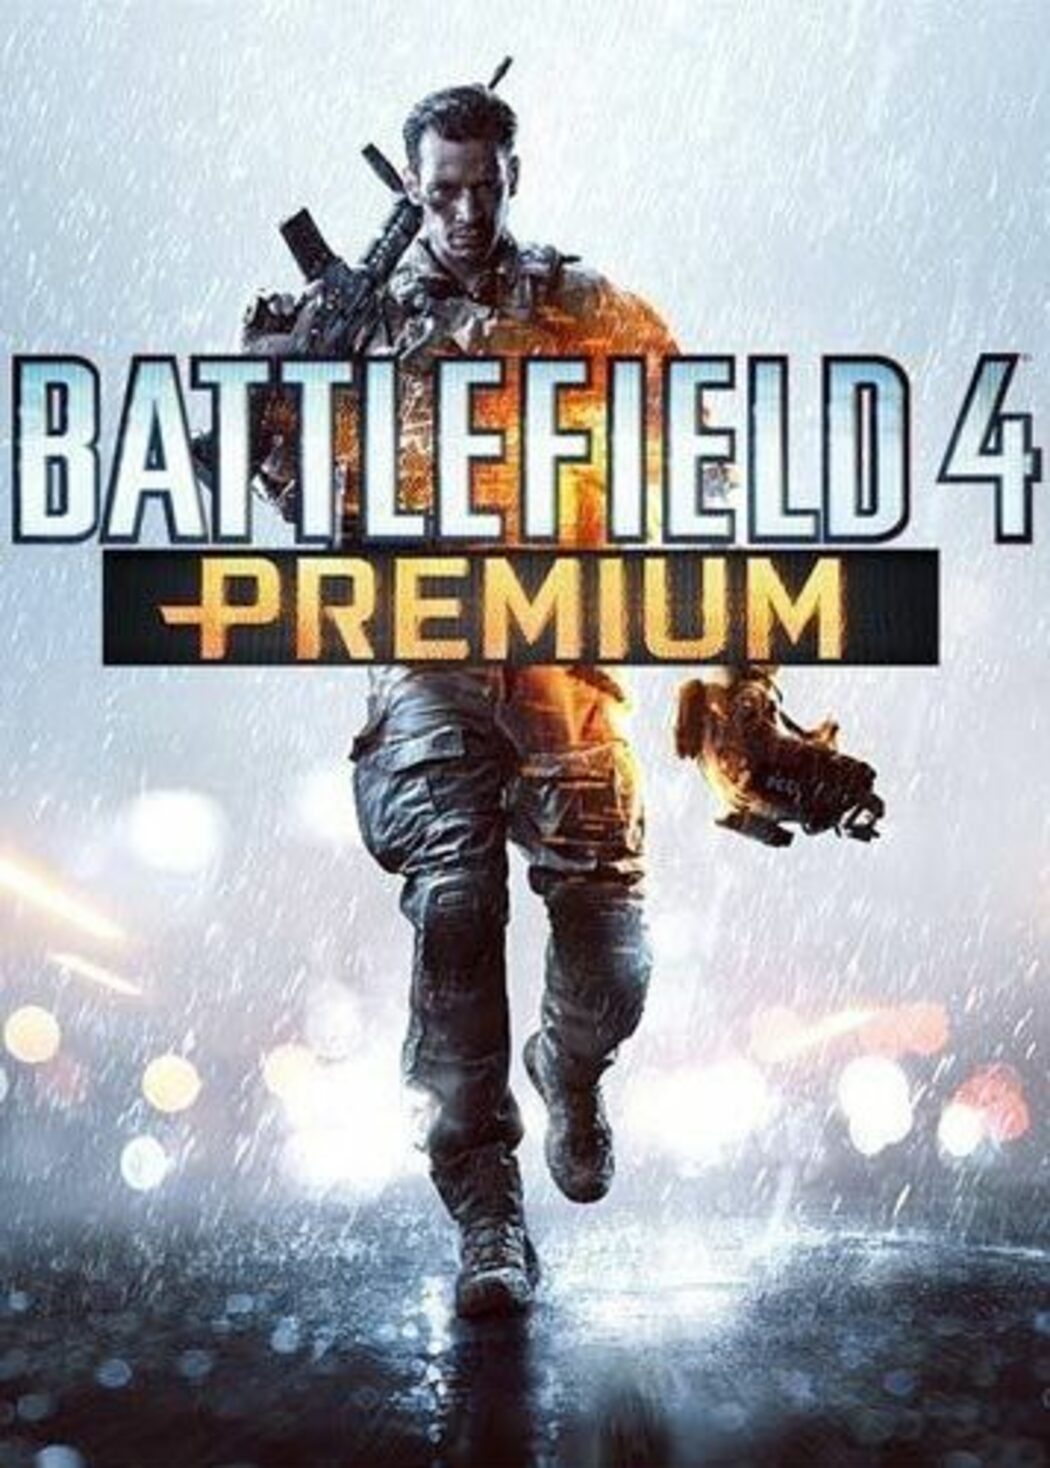 BATTLEFIELD 4(FINAL)PS4 PRO PT BR  Battlefield 4, Battlefield, Ps4 pro